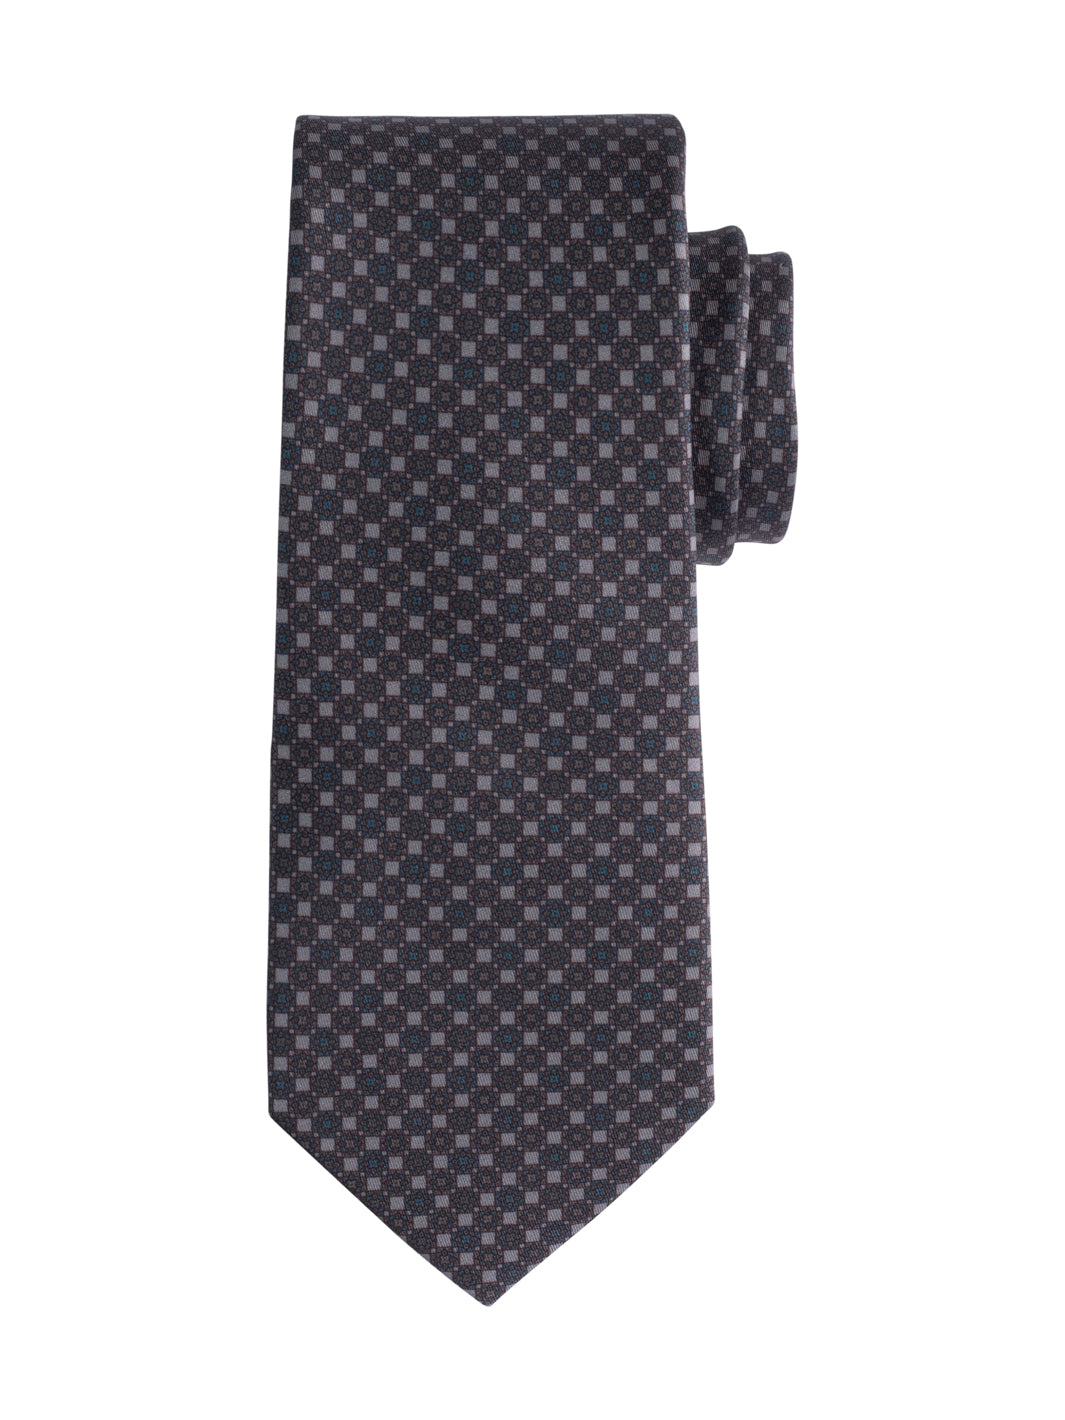 Rivelli Mens Dark Patterned Tie